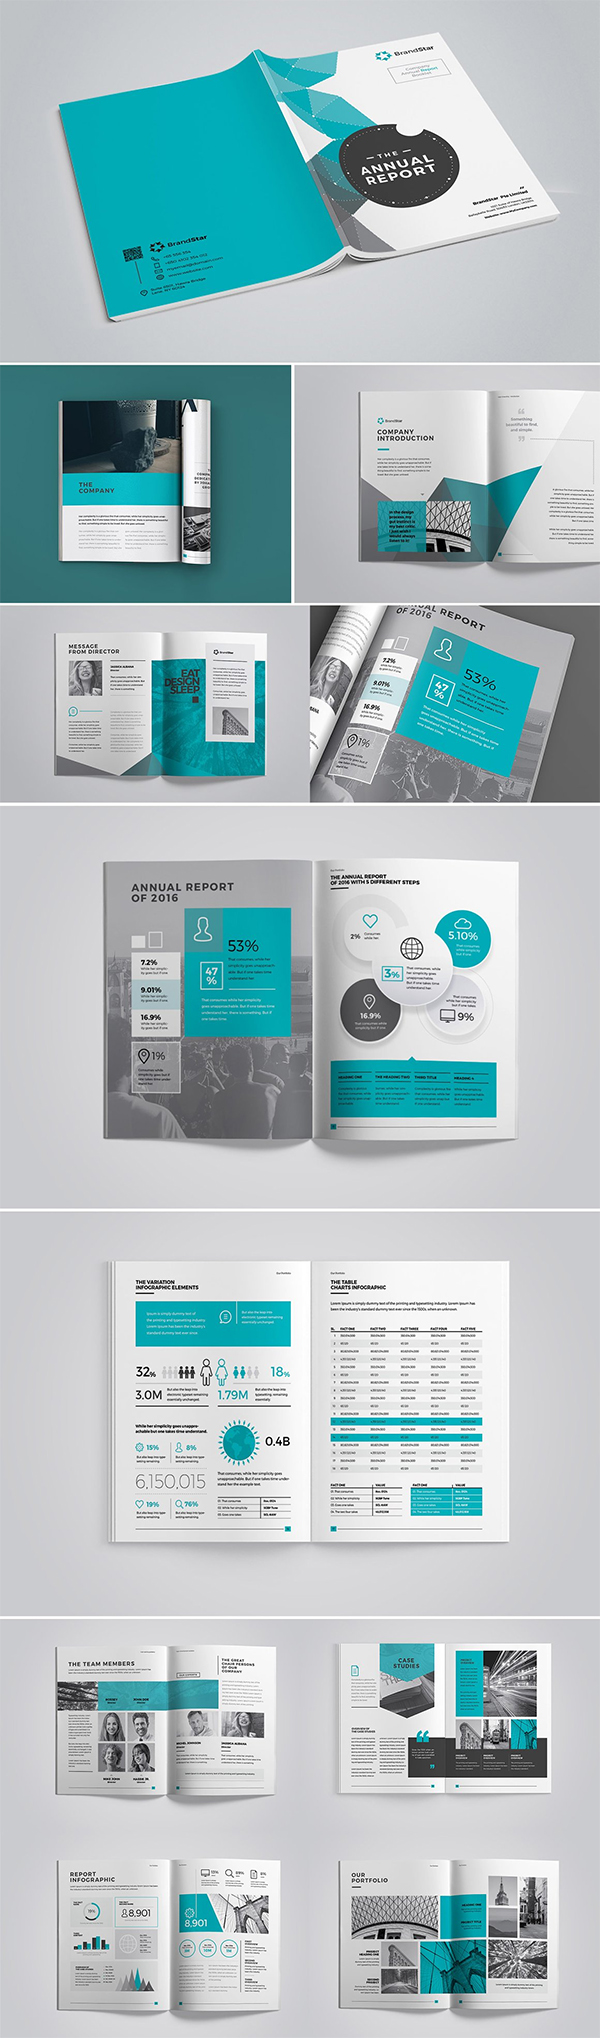 Creative Annual Report / Proposal Brochure